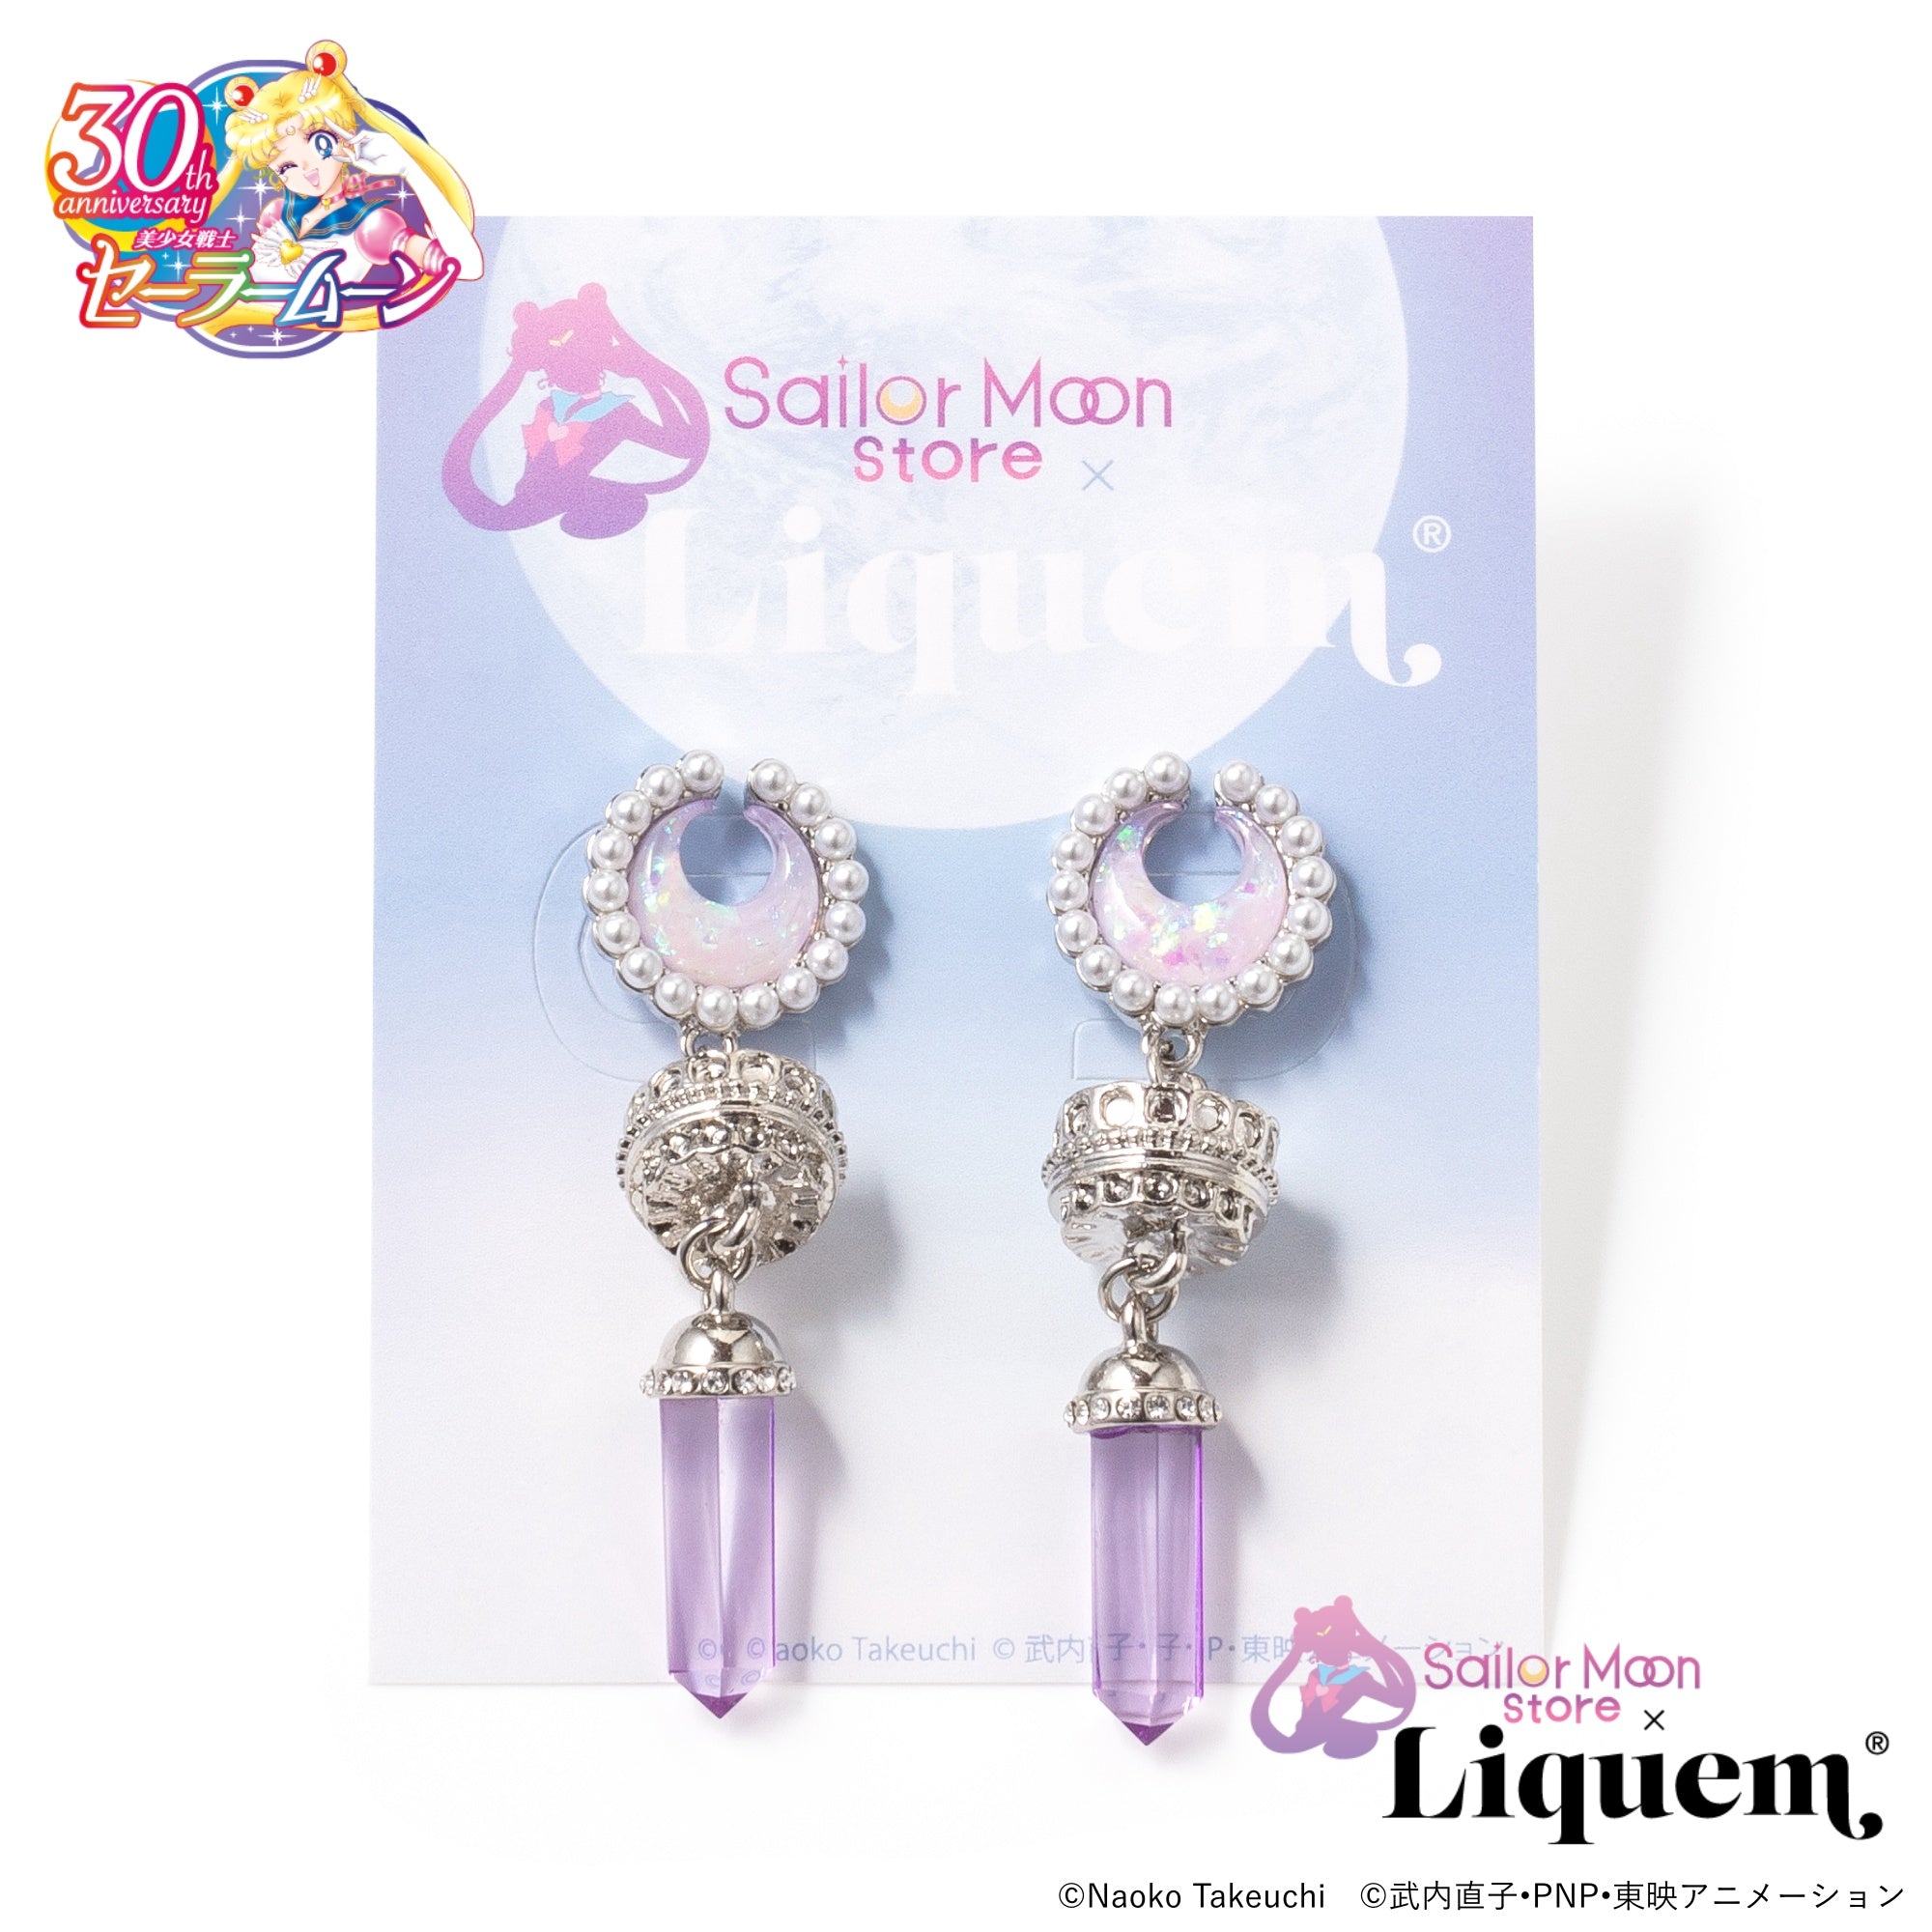 Sailor Moon store x Liquem / Liquem限定プリンセス・セレニティ ...